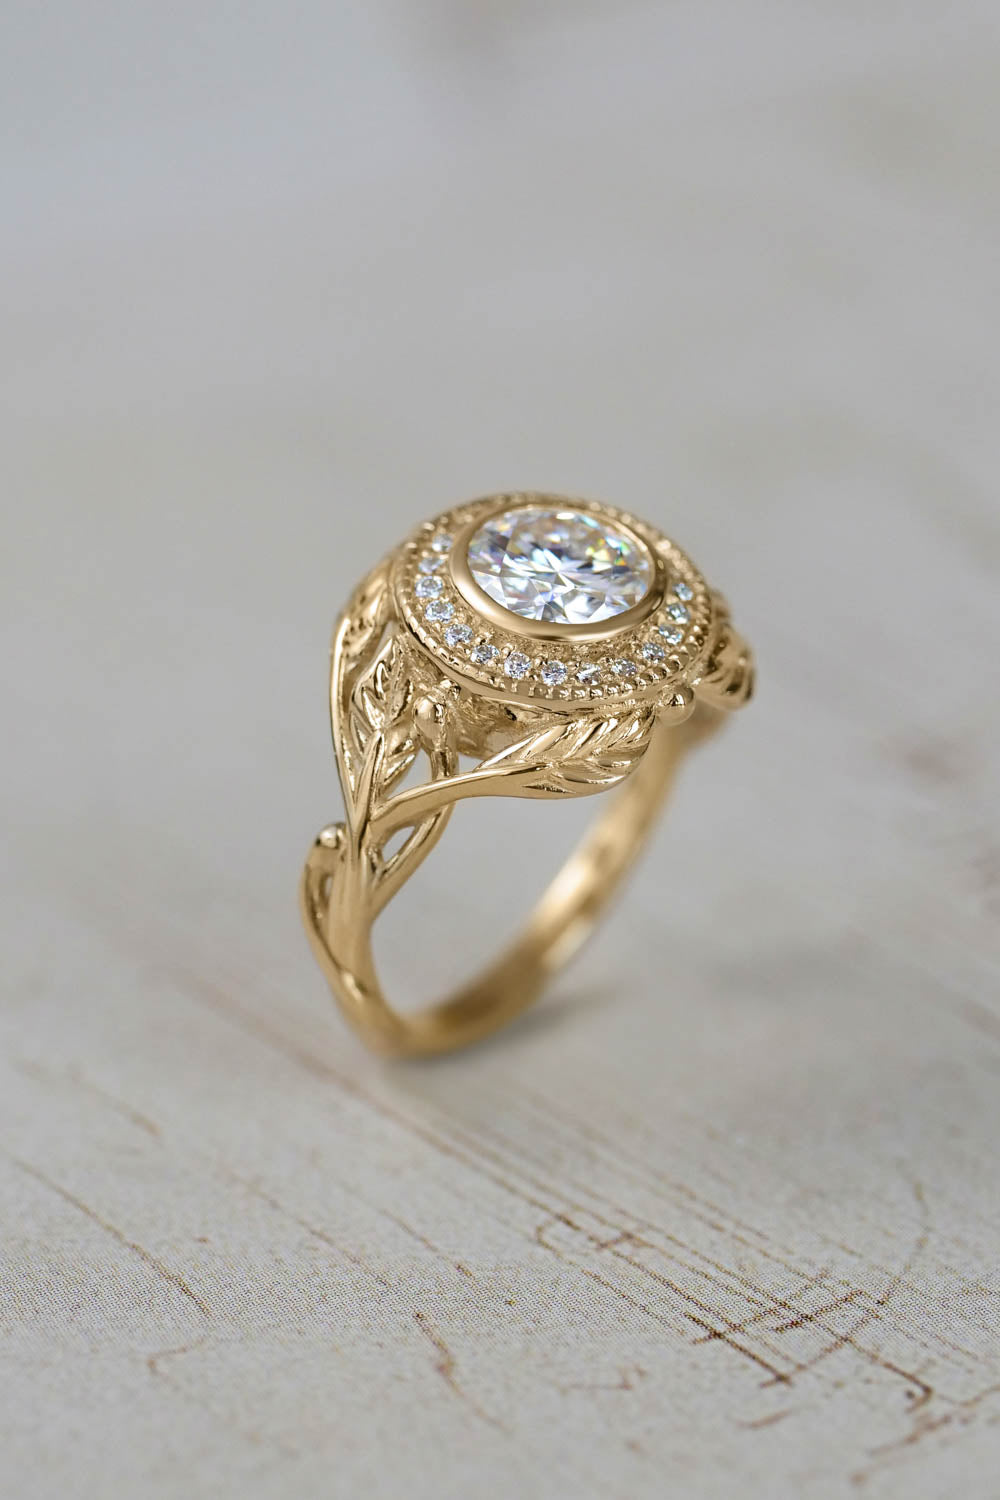 Halo engagement ring with moissanite / Tilia - Eden Garden Jewelry™